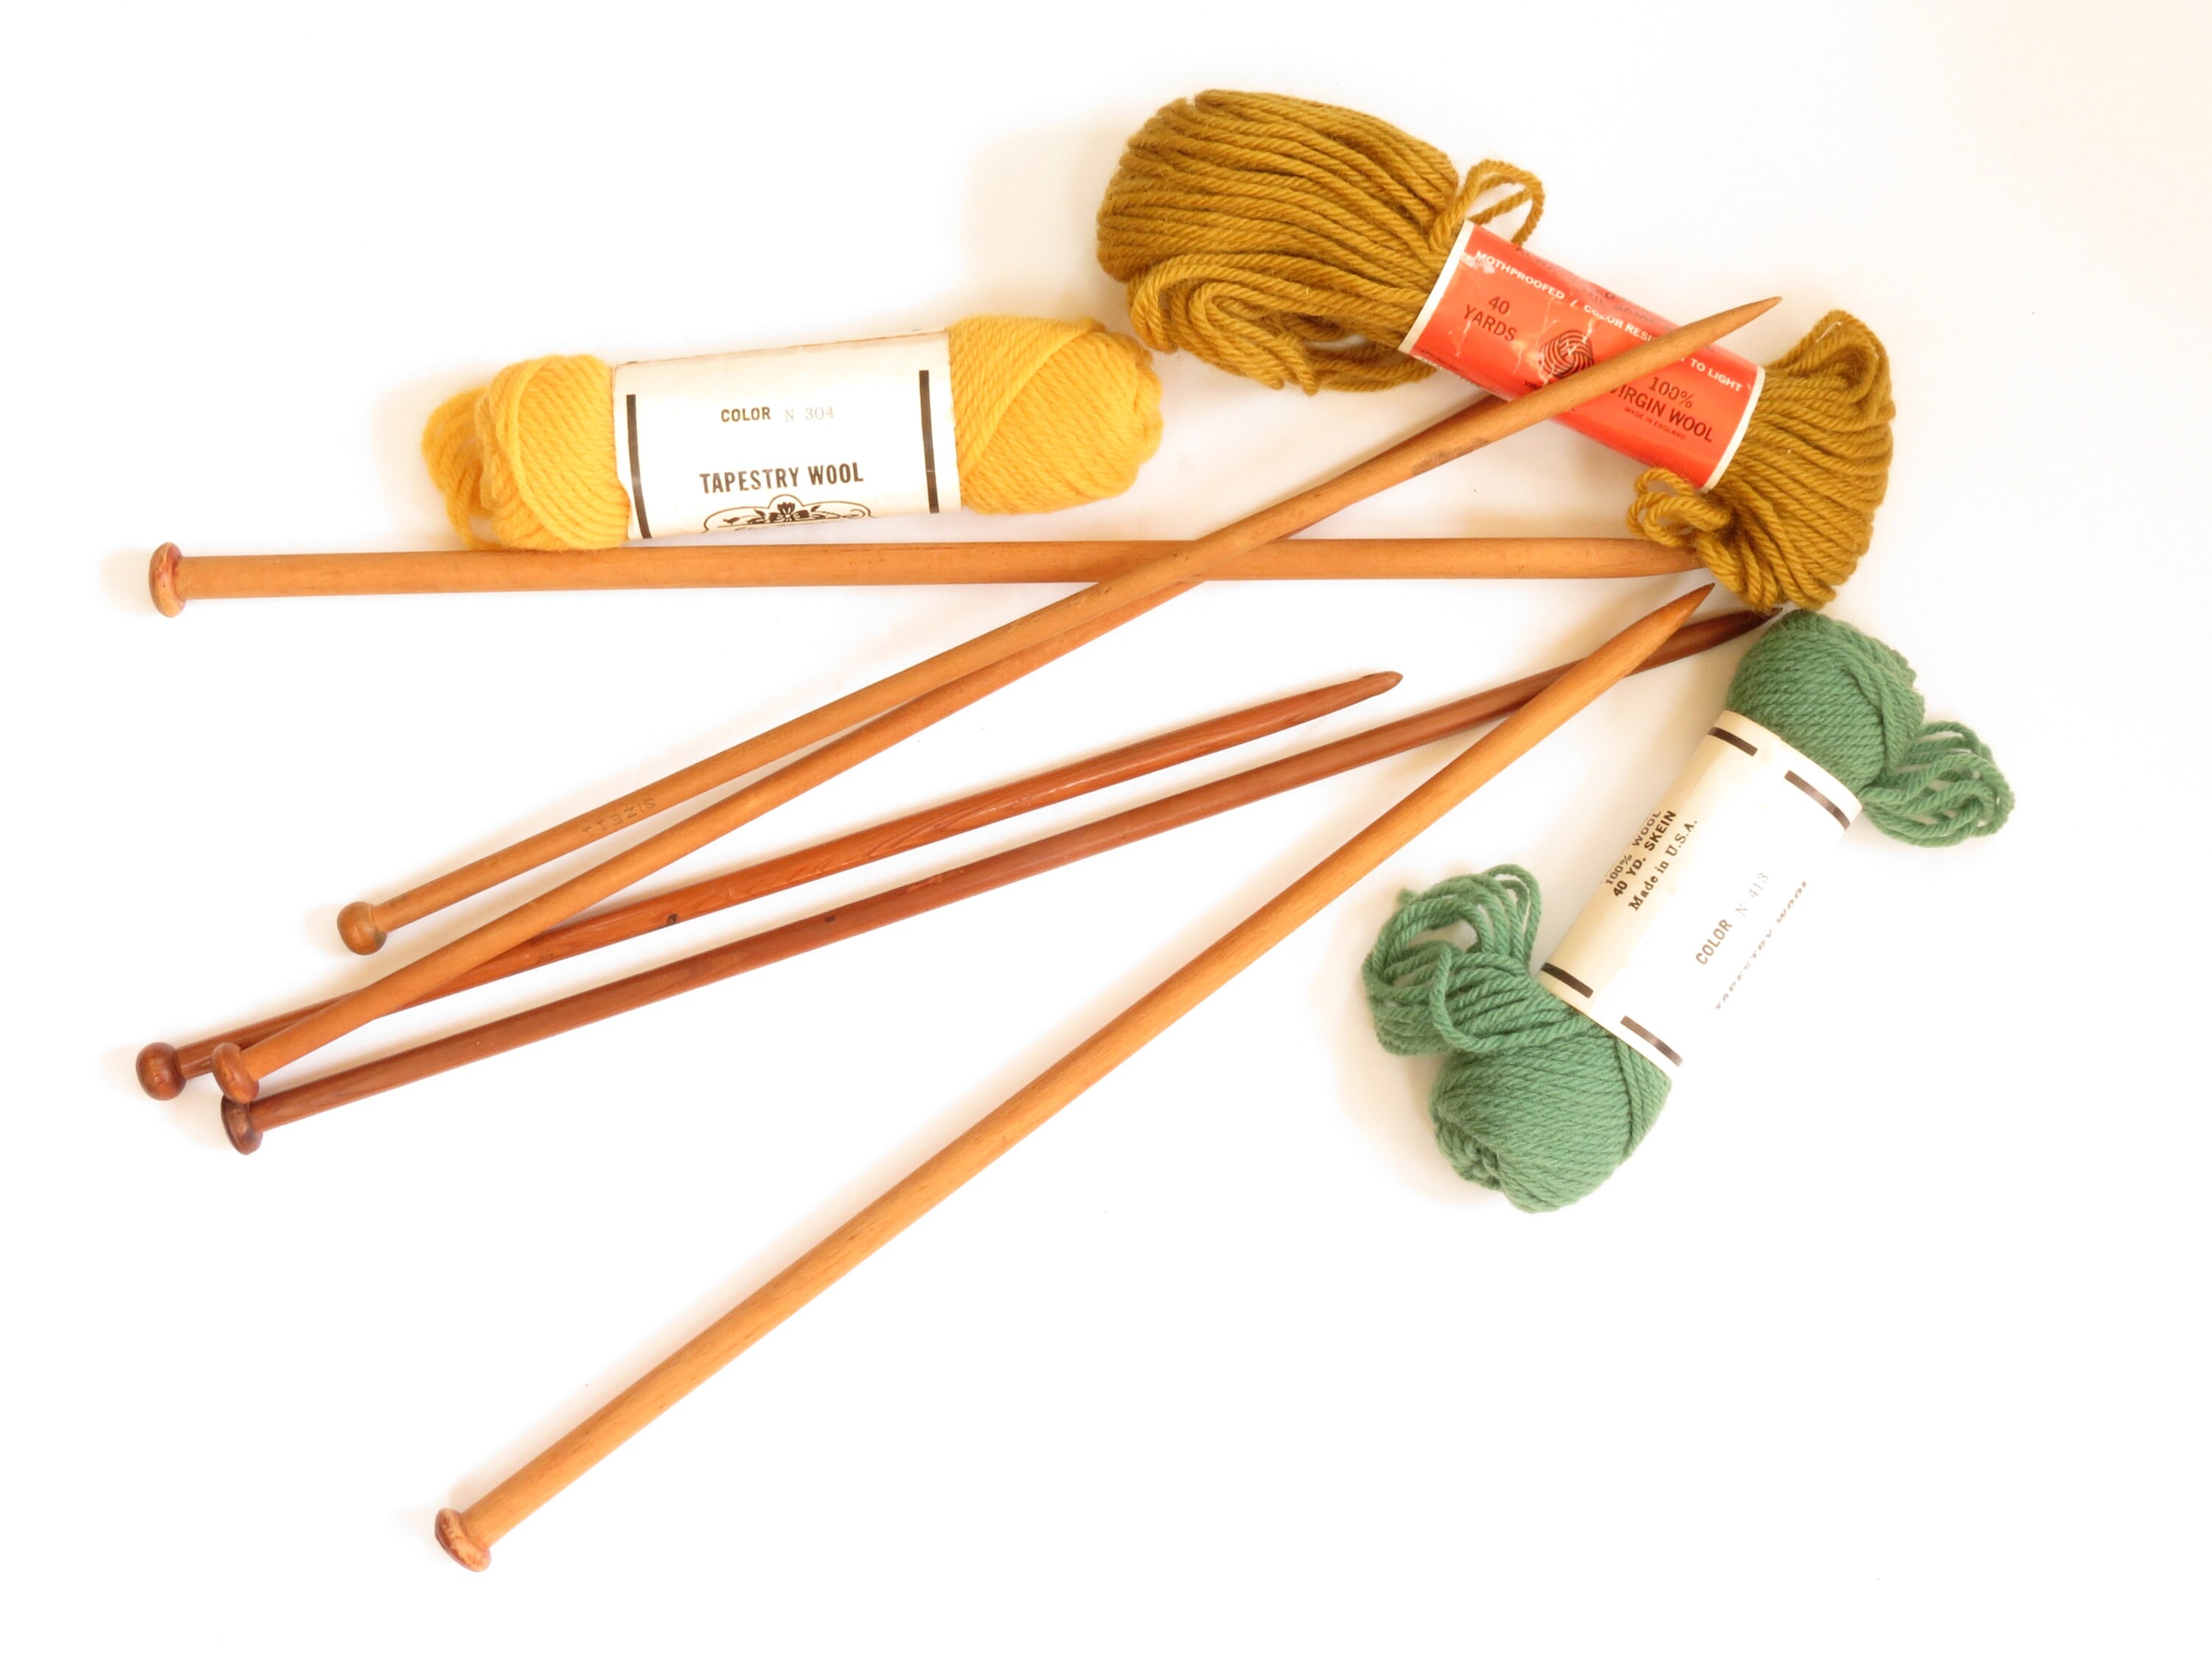 Lot of 39 Vintage Metal Knitting Needles Boye, Hero Multi colors Set  Antique